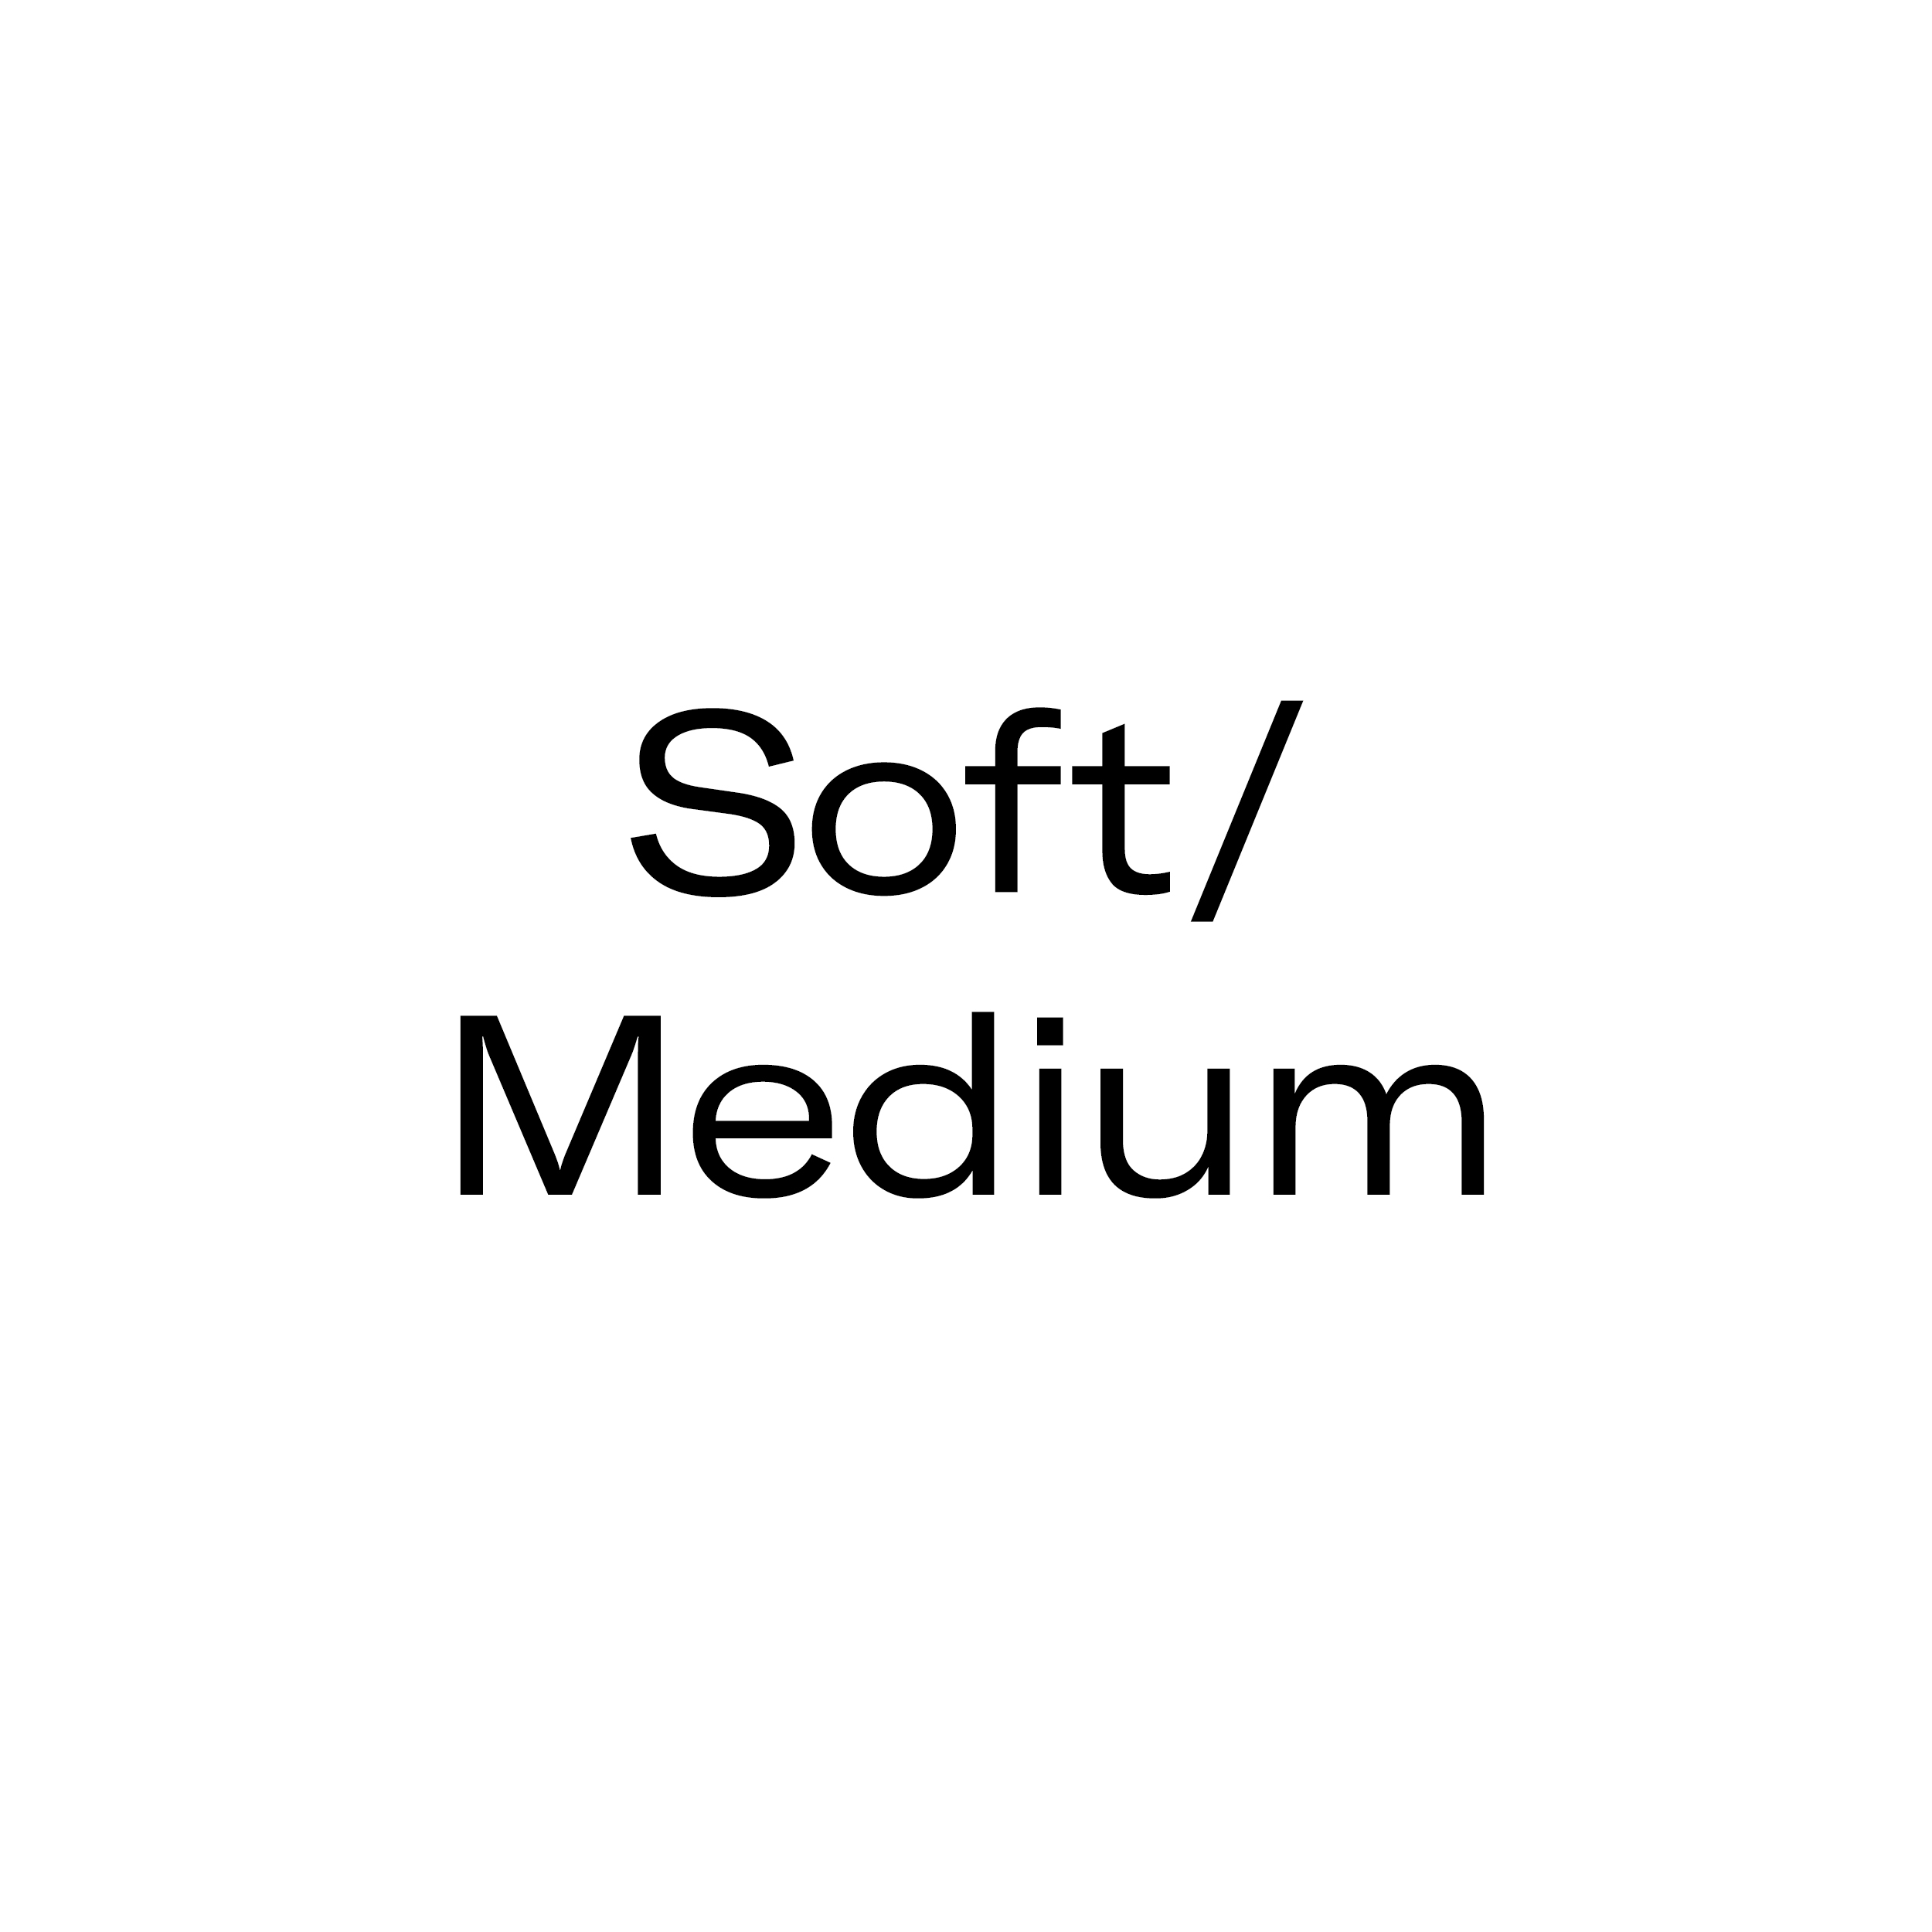 Soft/Medium